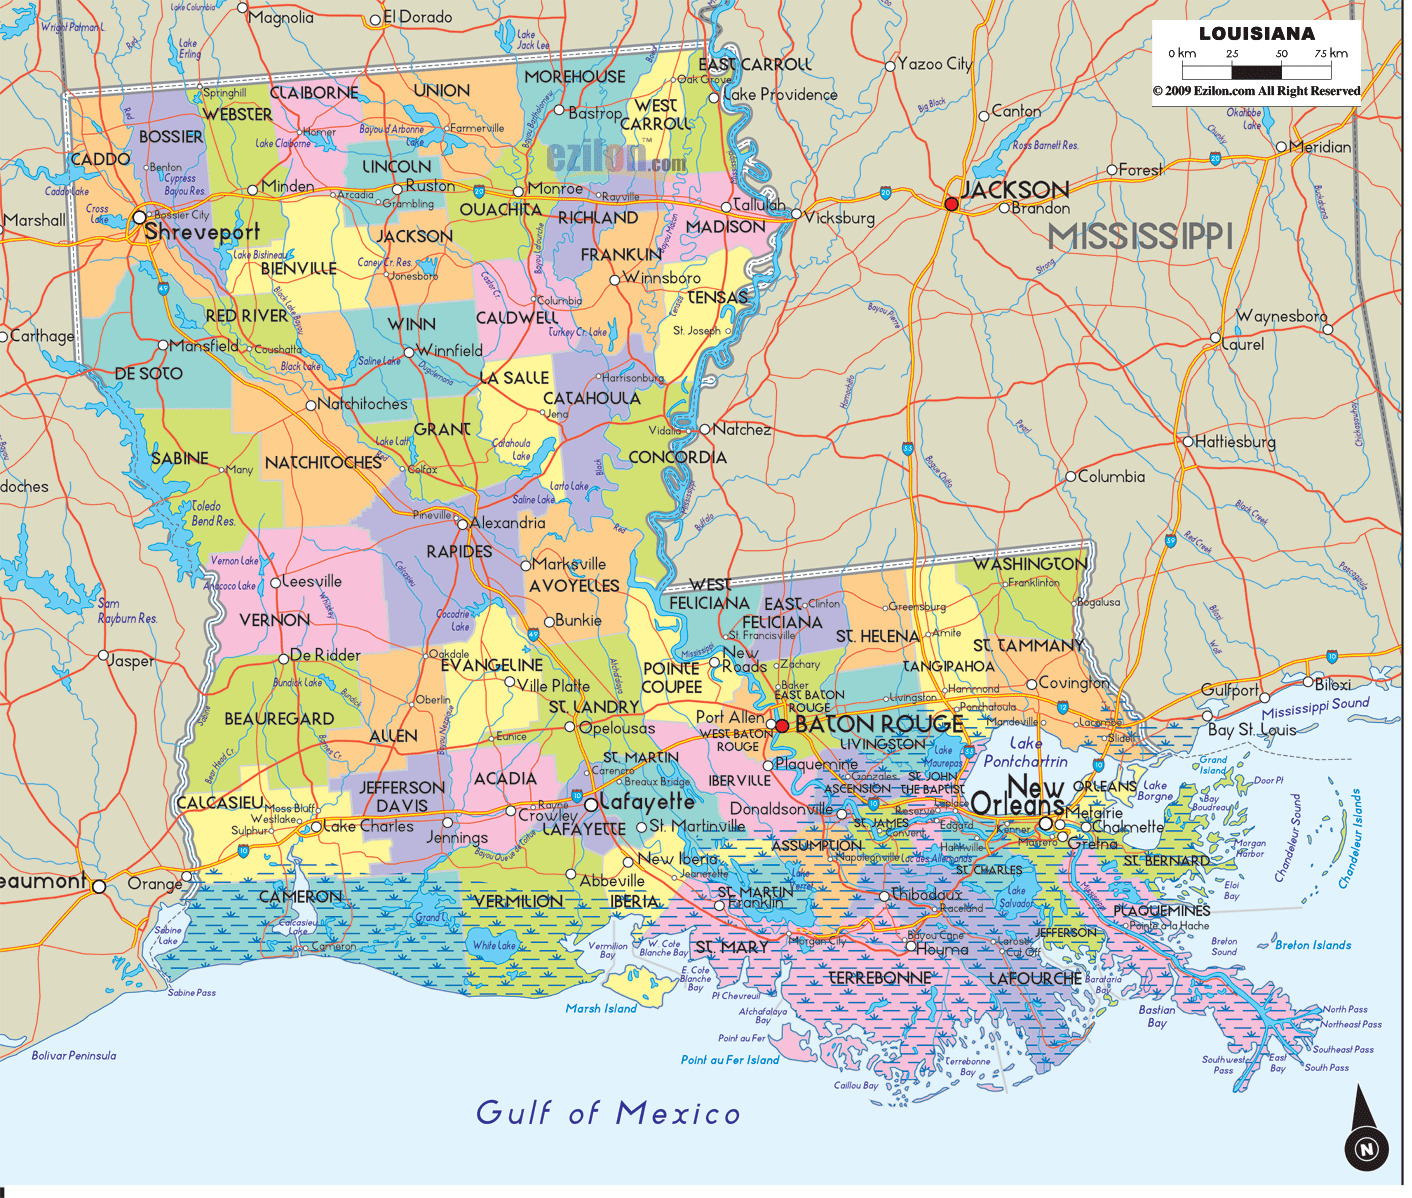 City And Parish Map Of Louisiana - Free Printable Maps